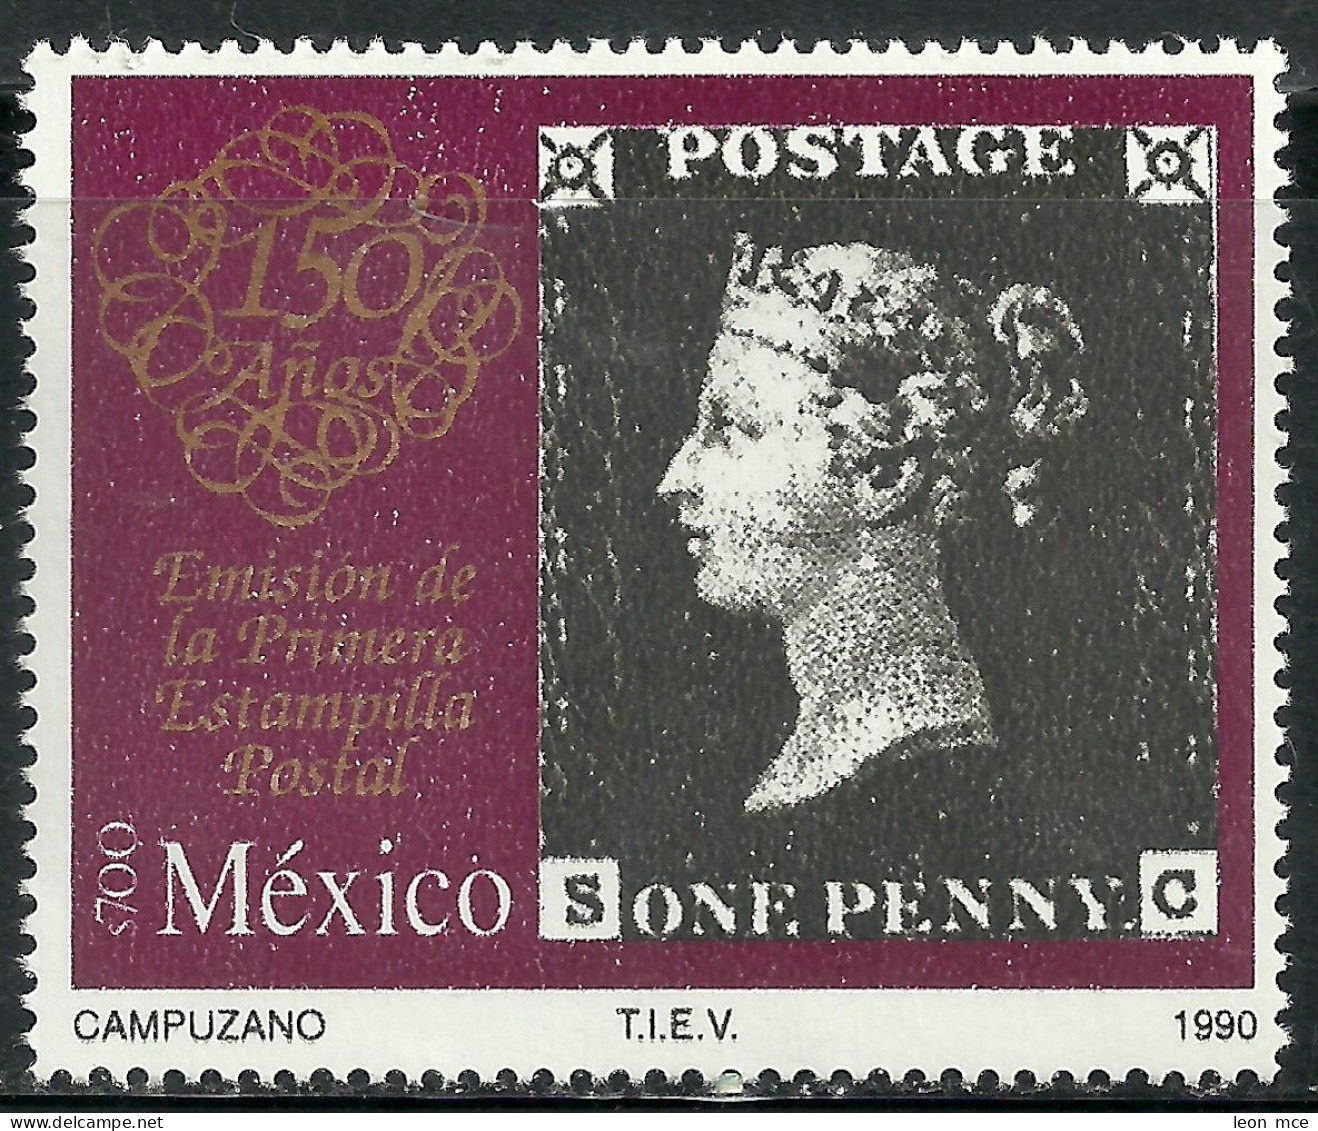 1990 MÉXICO PRIMERA ESTAMPILLA POSTAL ONE PENNY Sc. 1645 MNH FIRST POSTAGE STAMPS 150th. ANNIV. - Messico